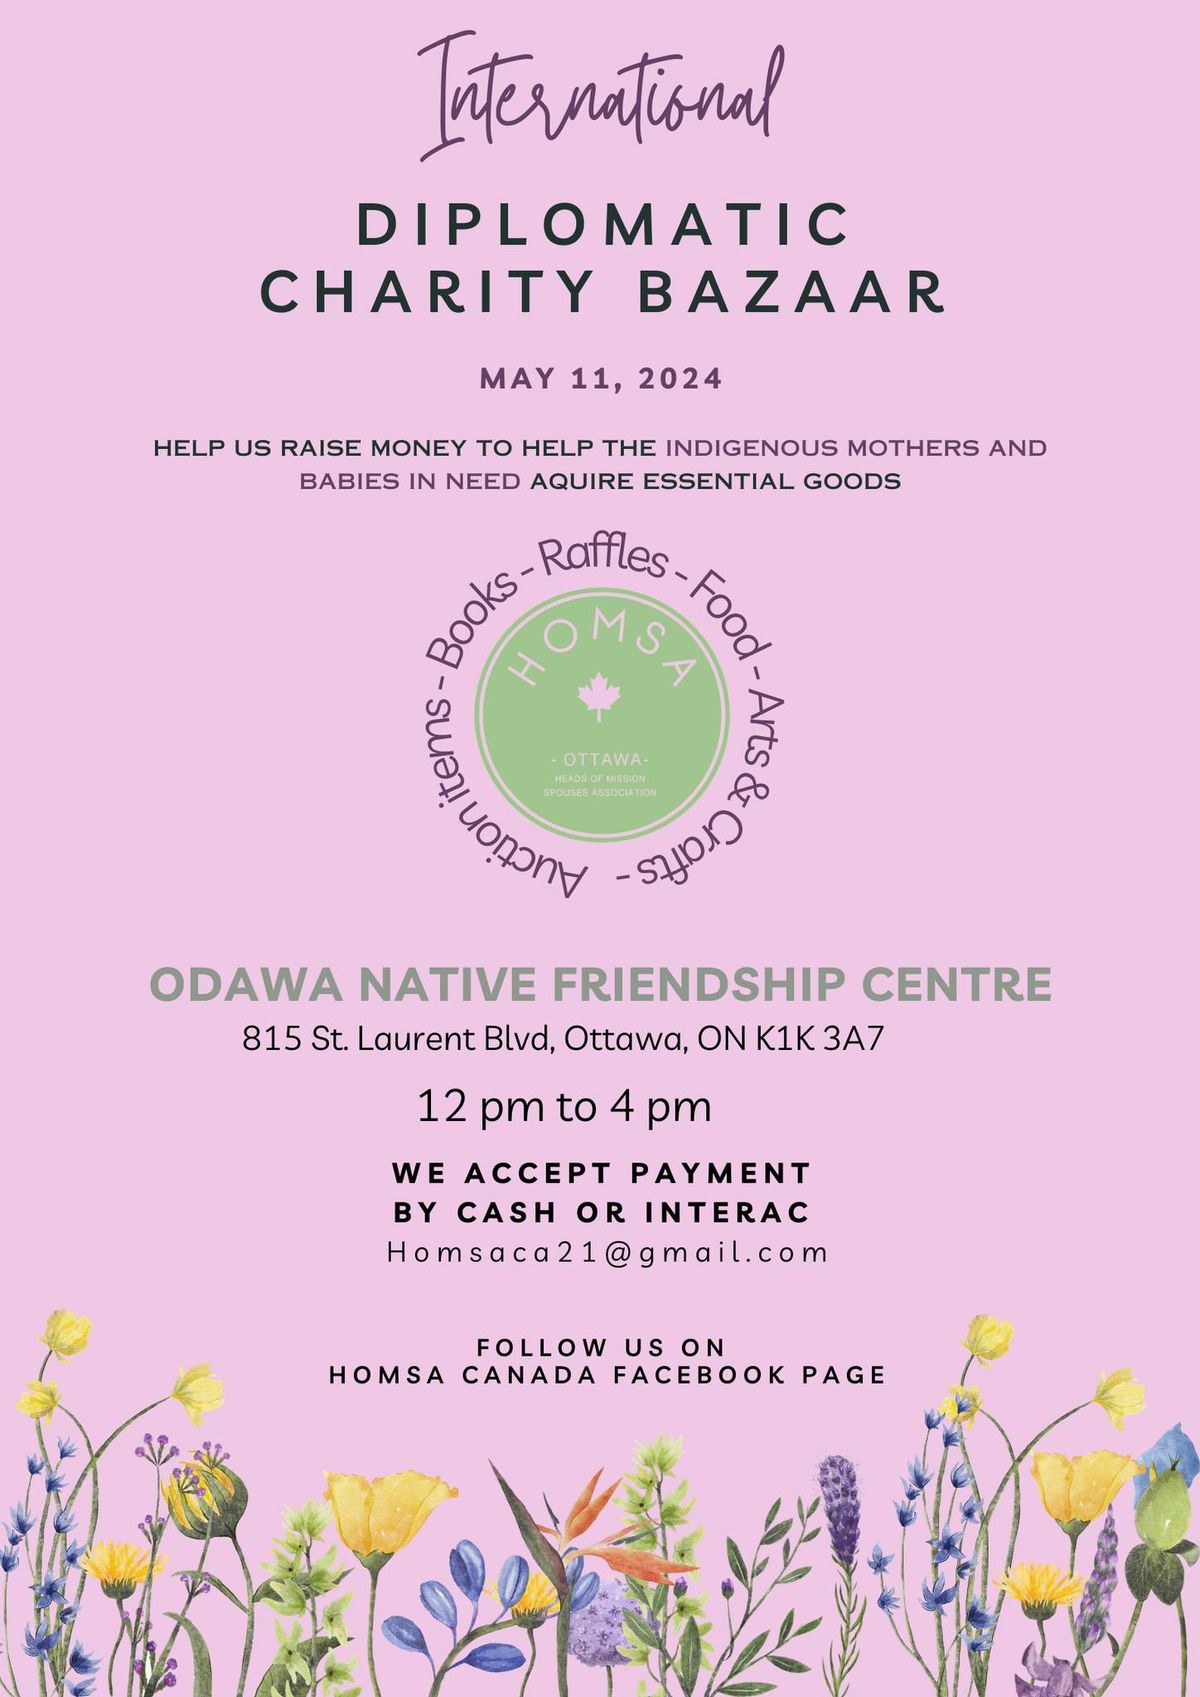 HOMSA Charity Bazaar for Odawa